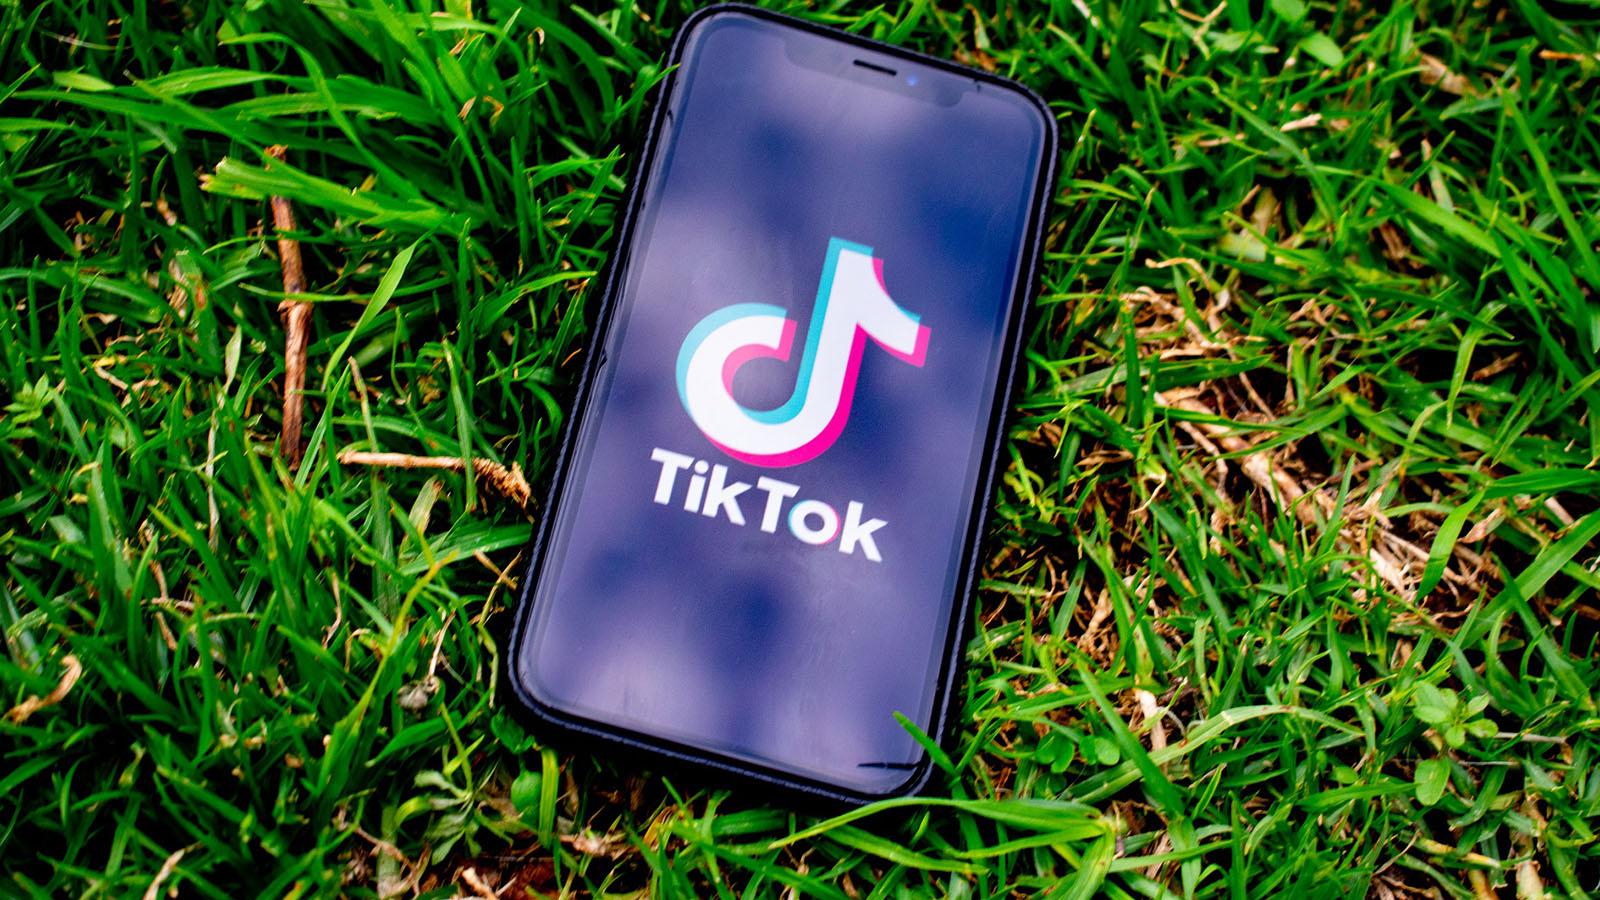 TIkTok on phone laying on grass